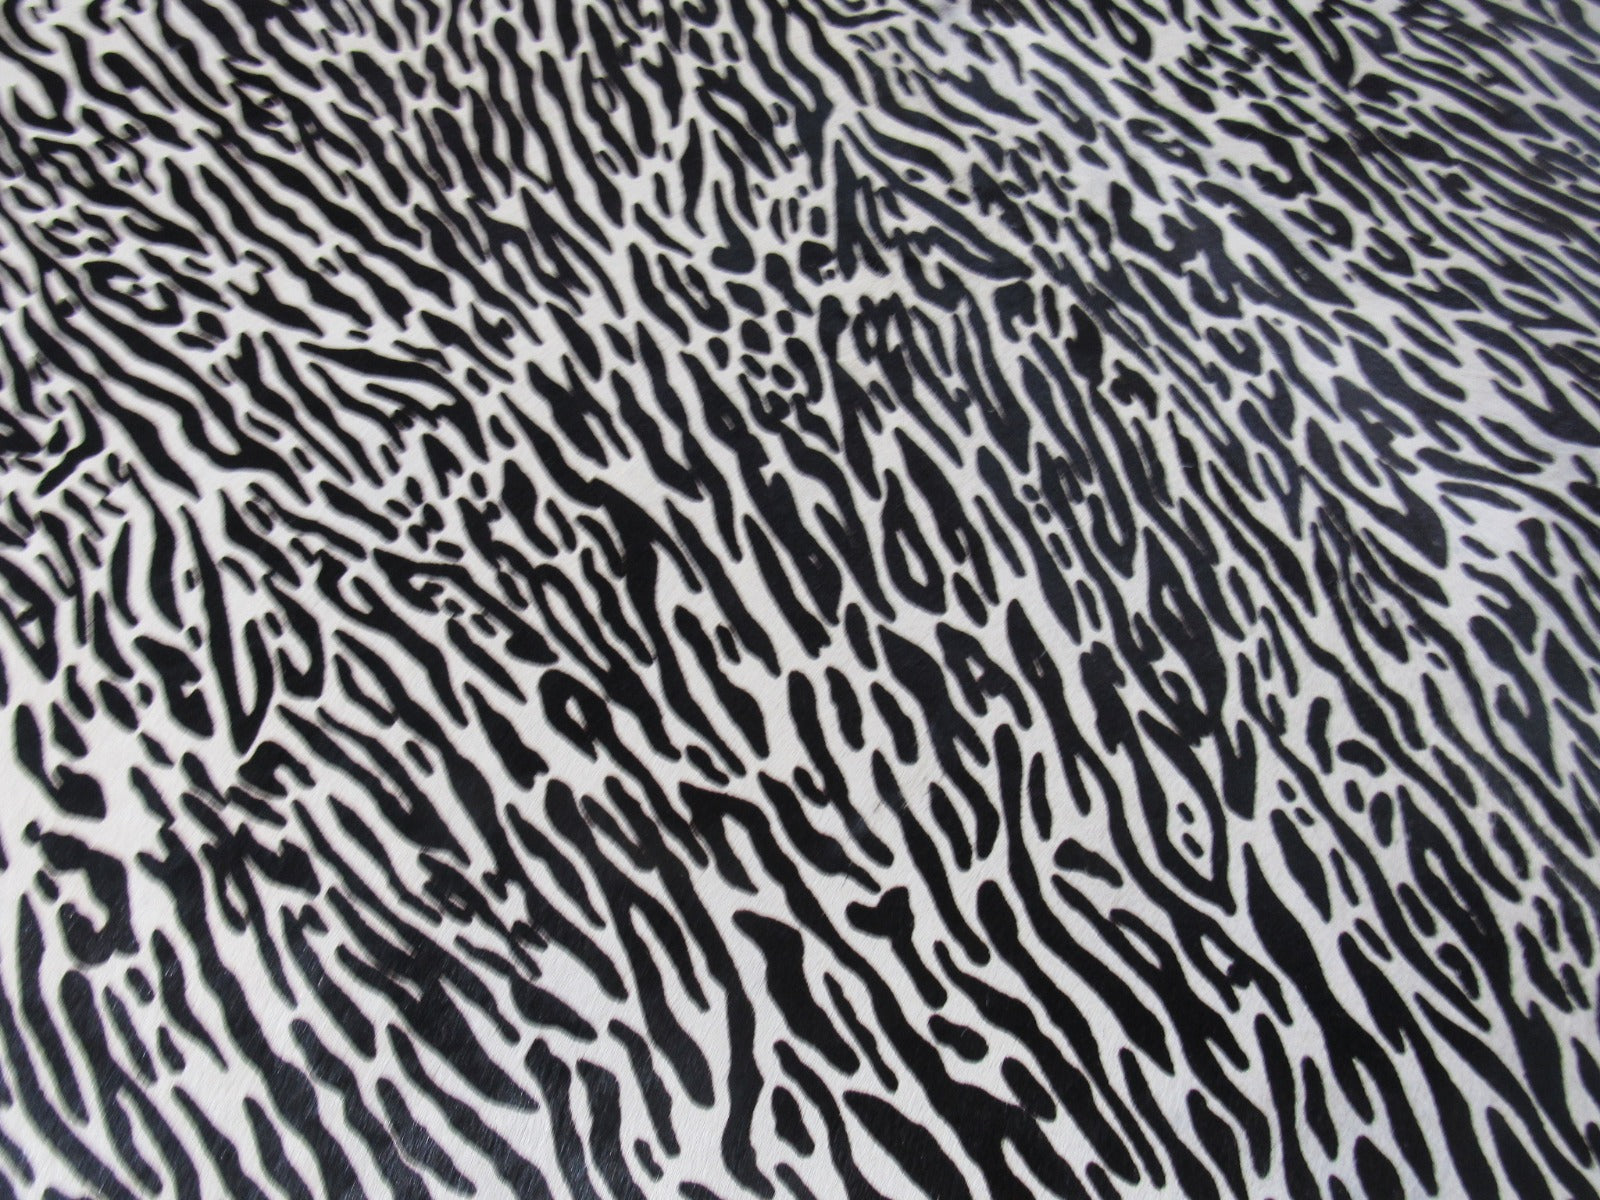 Baby Zebra Cowhide Rug (neck has a bit of beige) Size: 6 1/2x5 1/4 feet M-1091